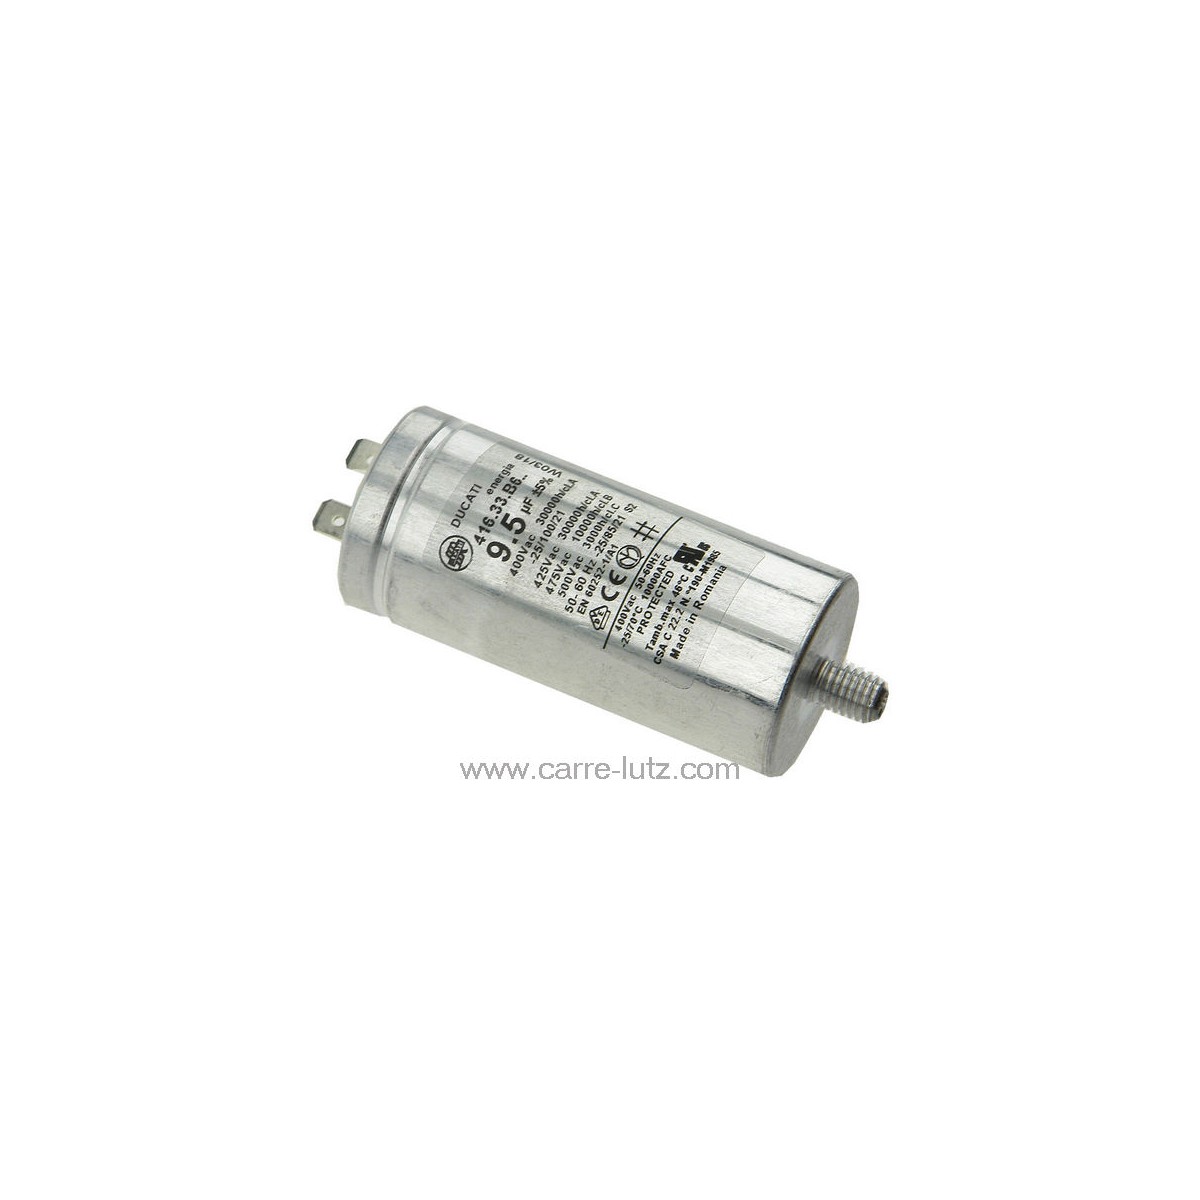 23090016  Condensateur permanent 9,5MF 450V C00275351 Ariston  10,20 €